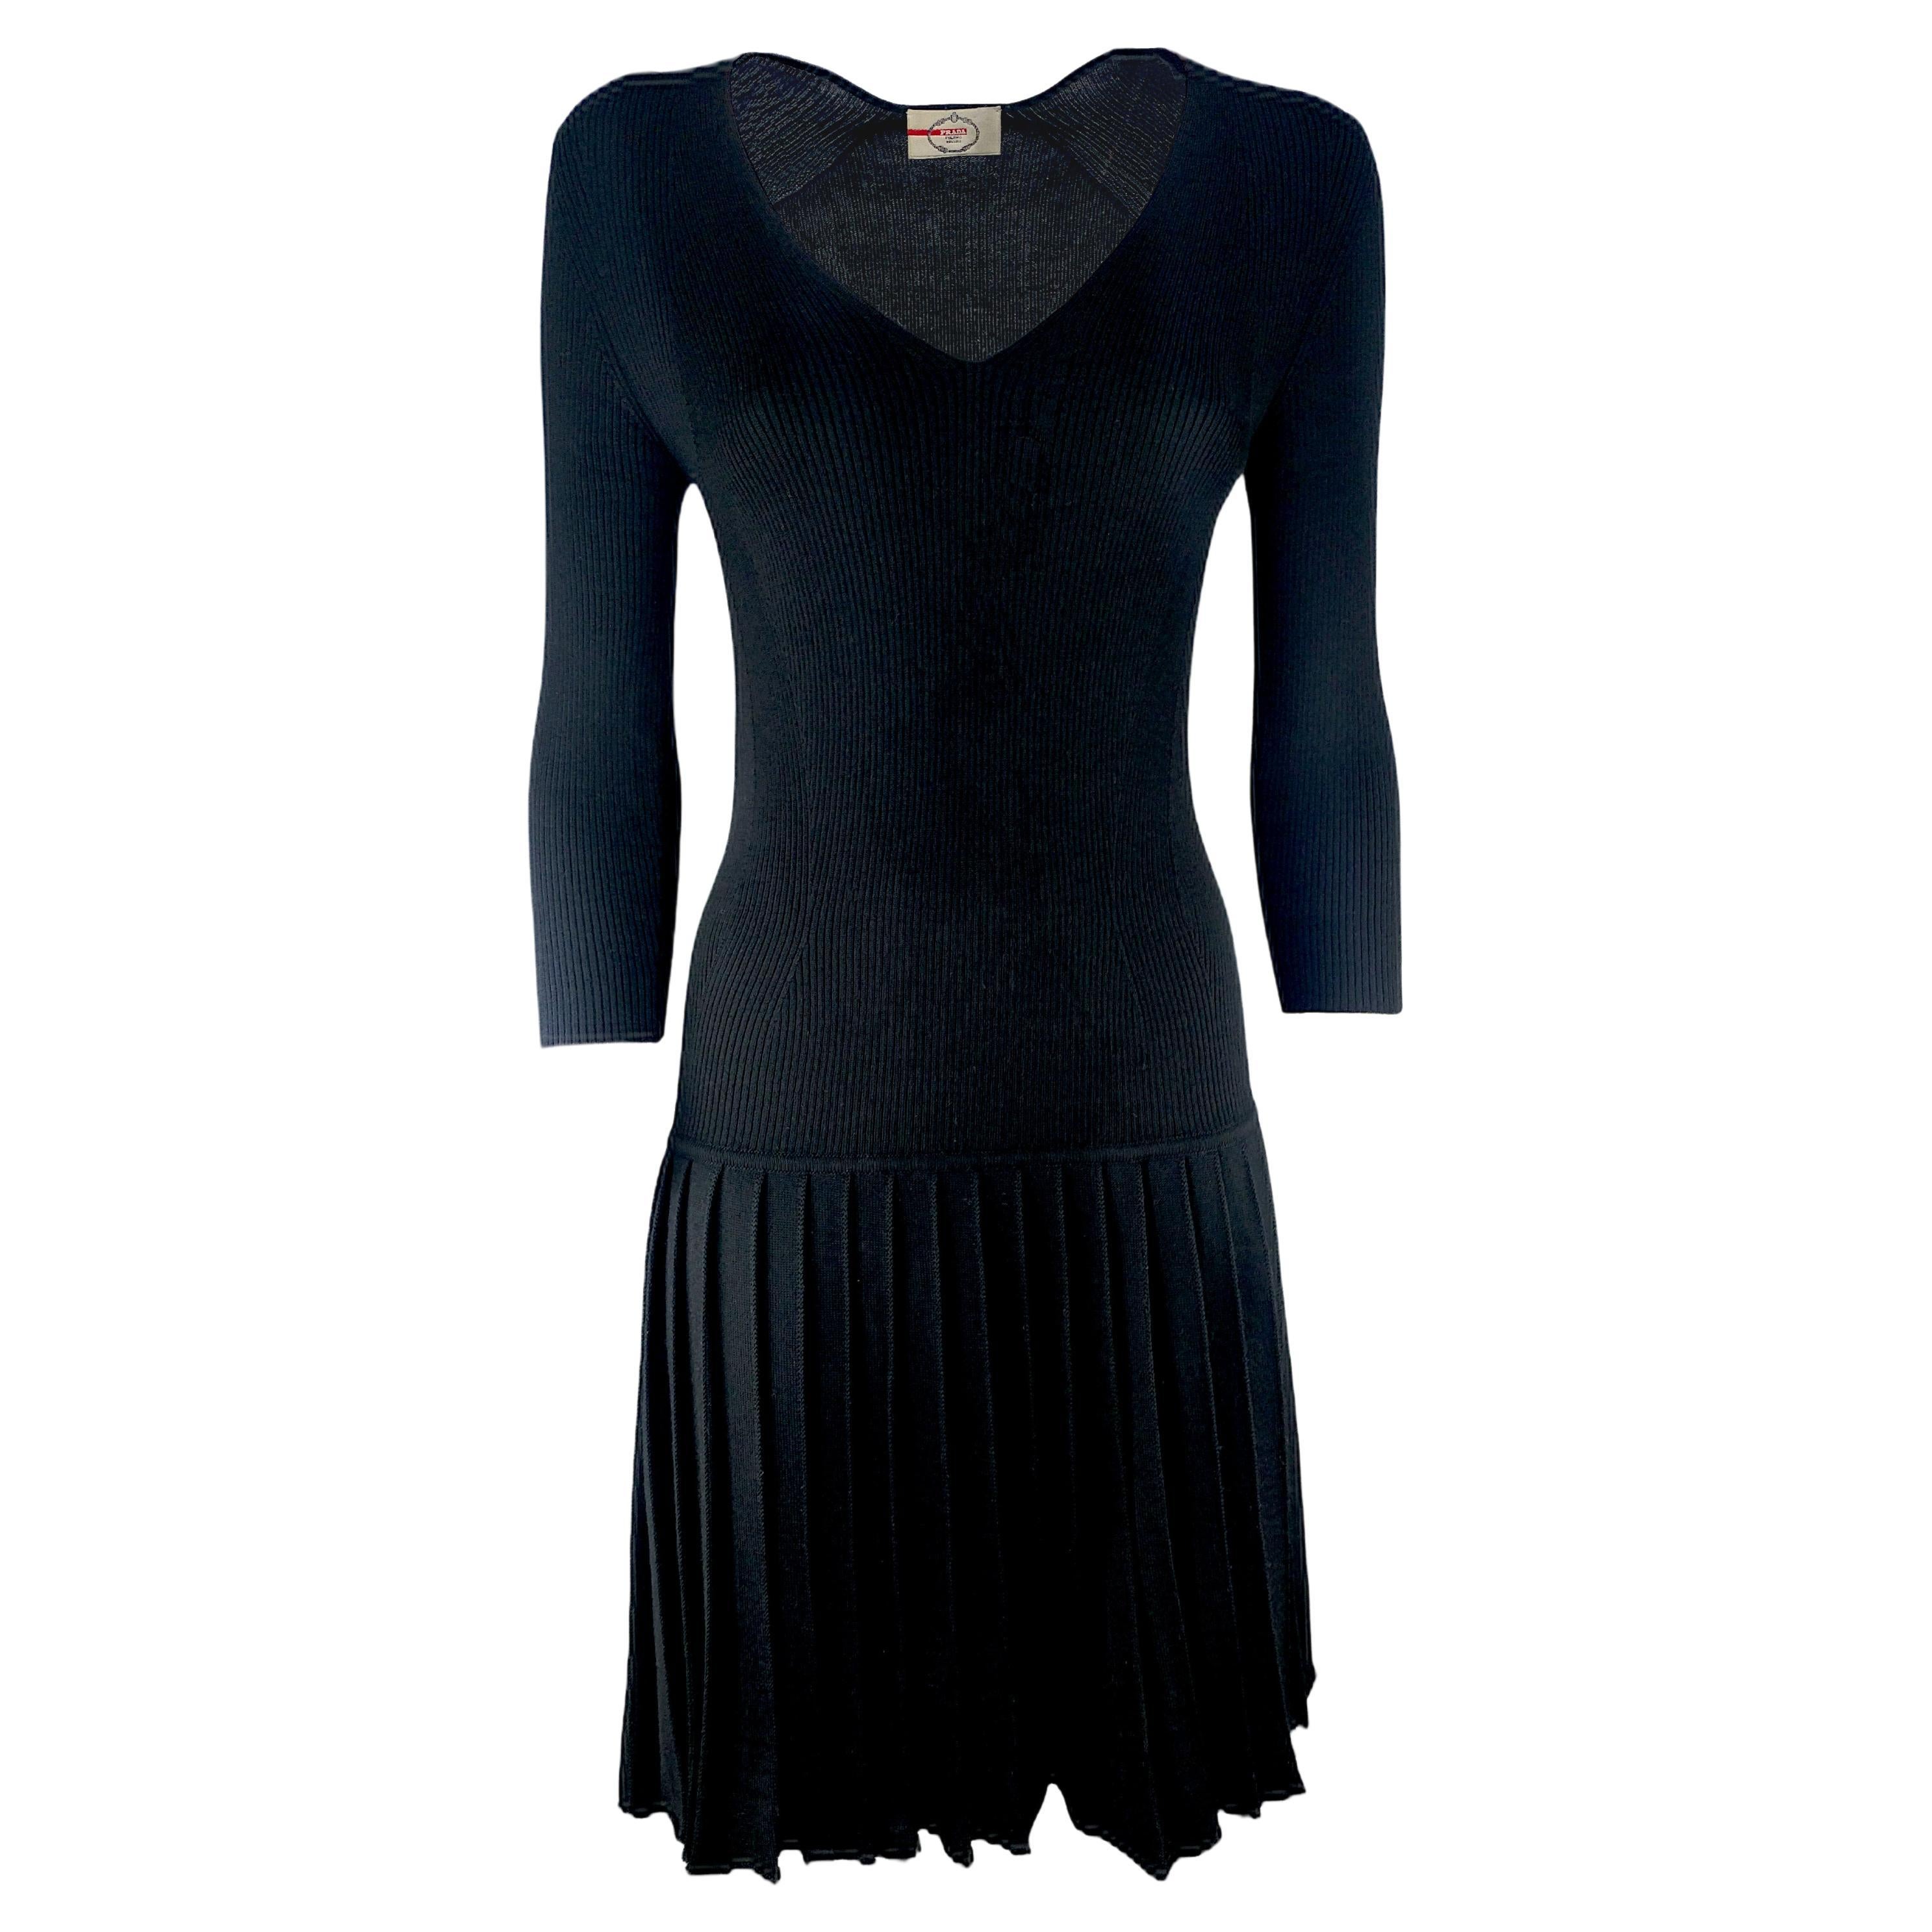 PRADA – Black Knitted Stretch Wool Dress with Pleated Skirt  Size 6US 38EU